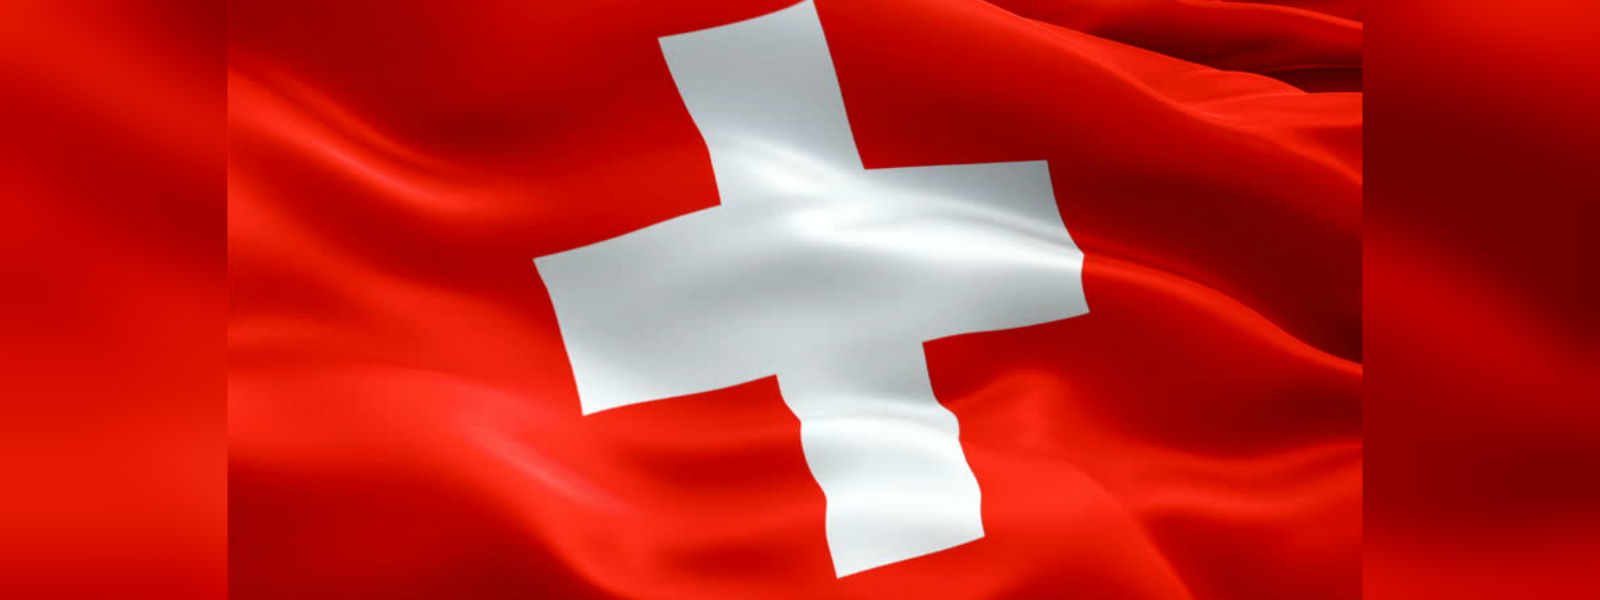 Switzerland dispatches senior diplomat to handle “current crisis”